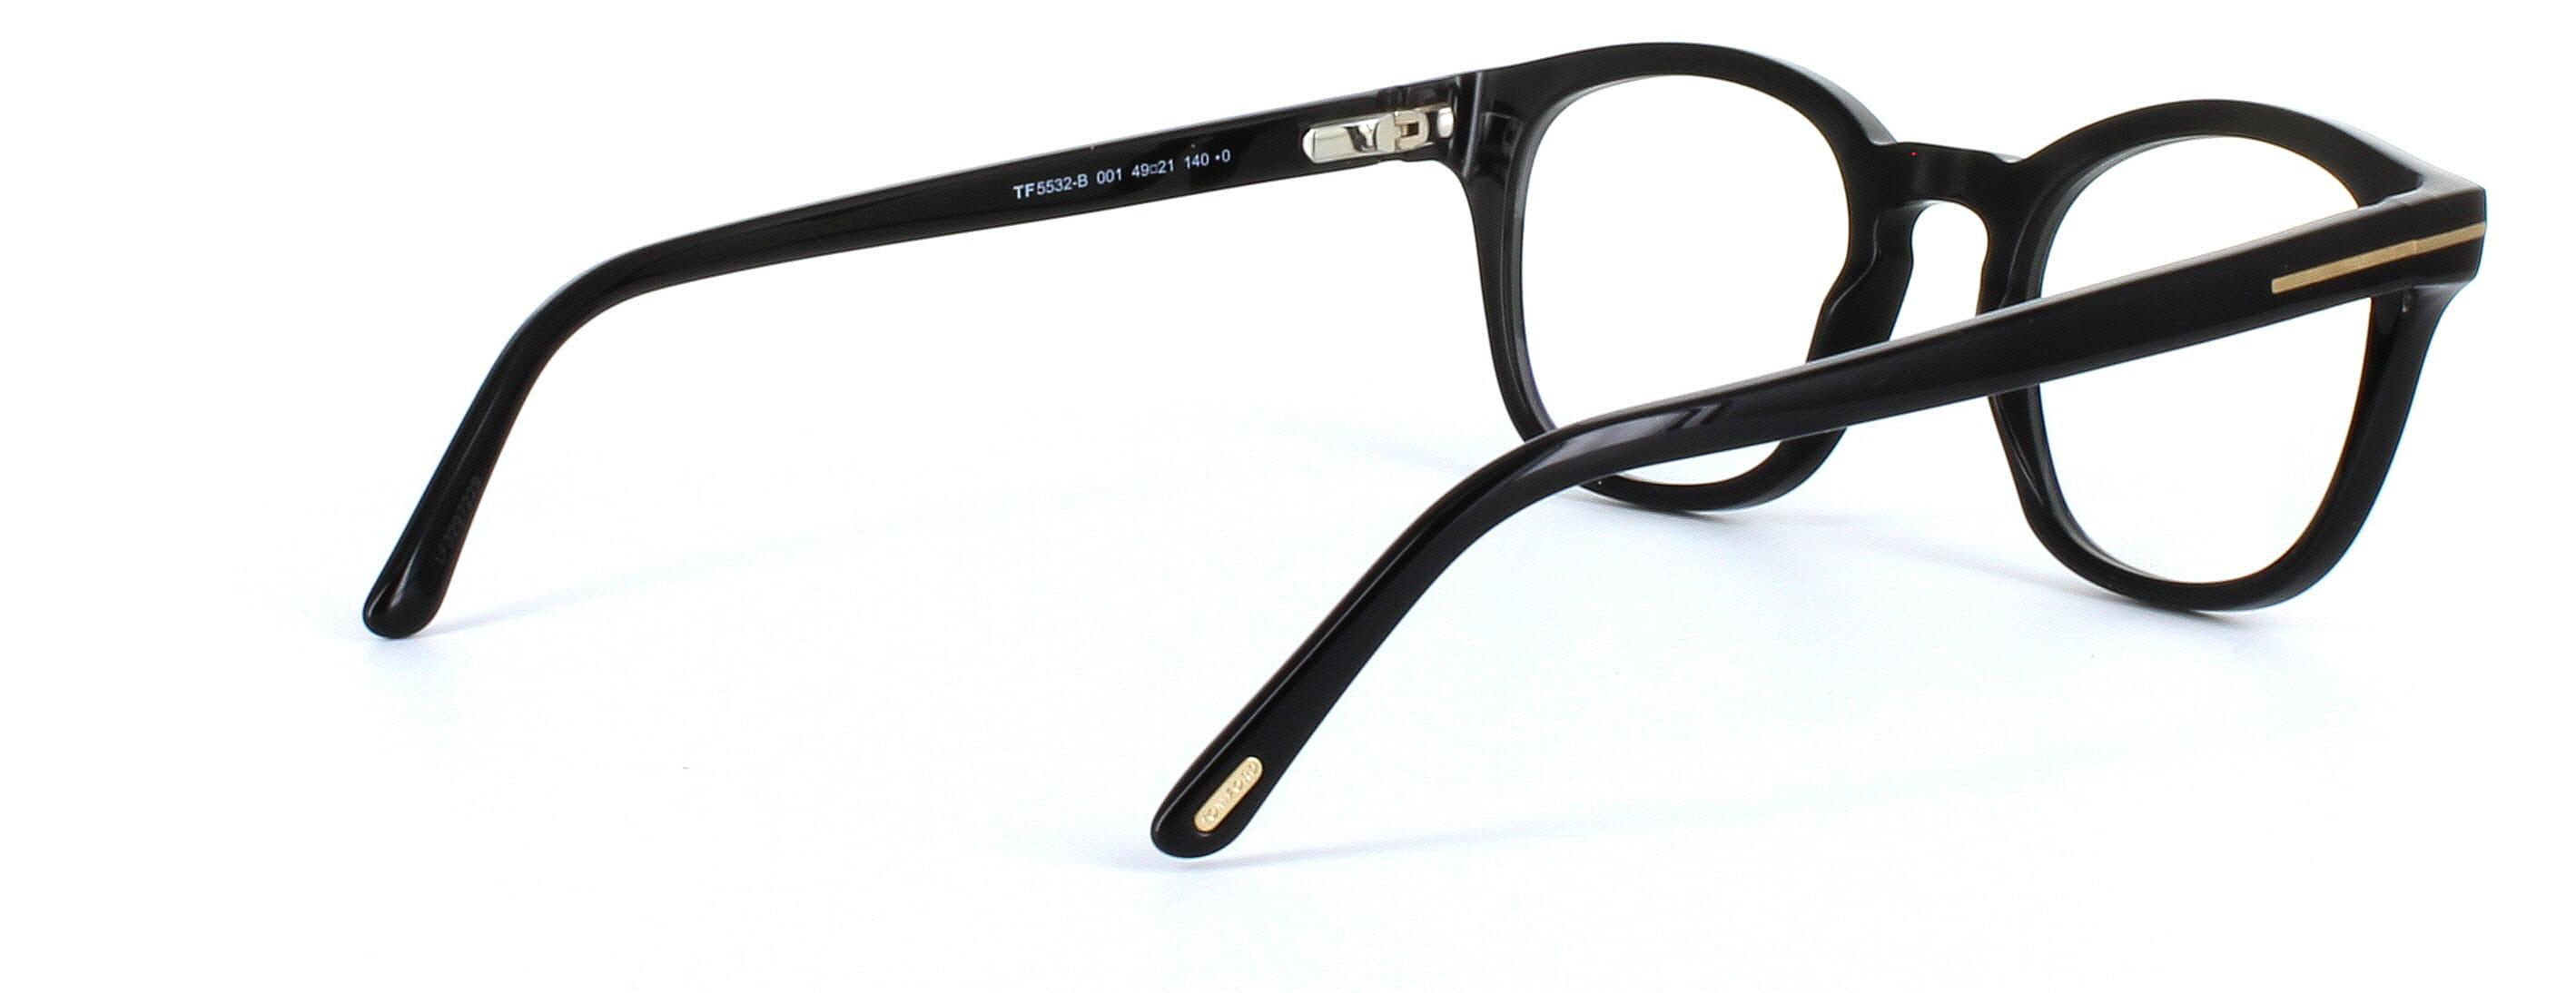 Tom Ford glasses model 5532 - Product image 4